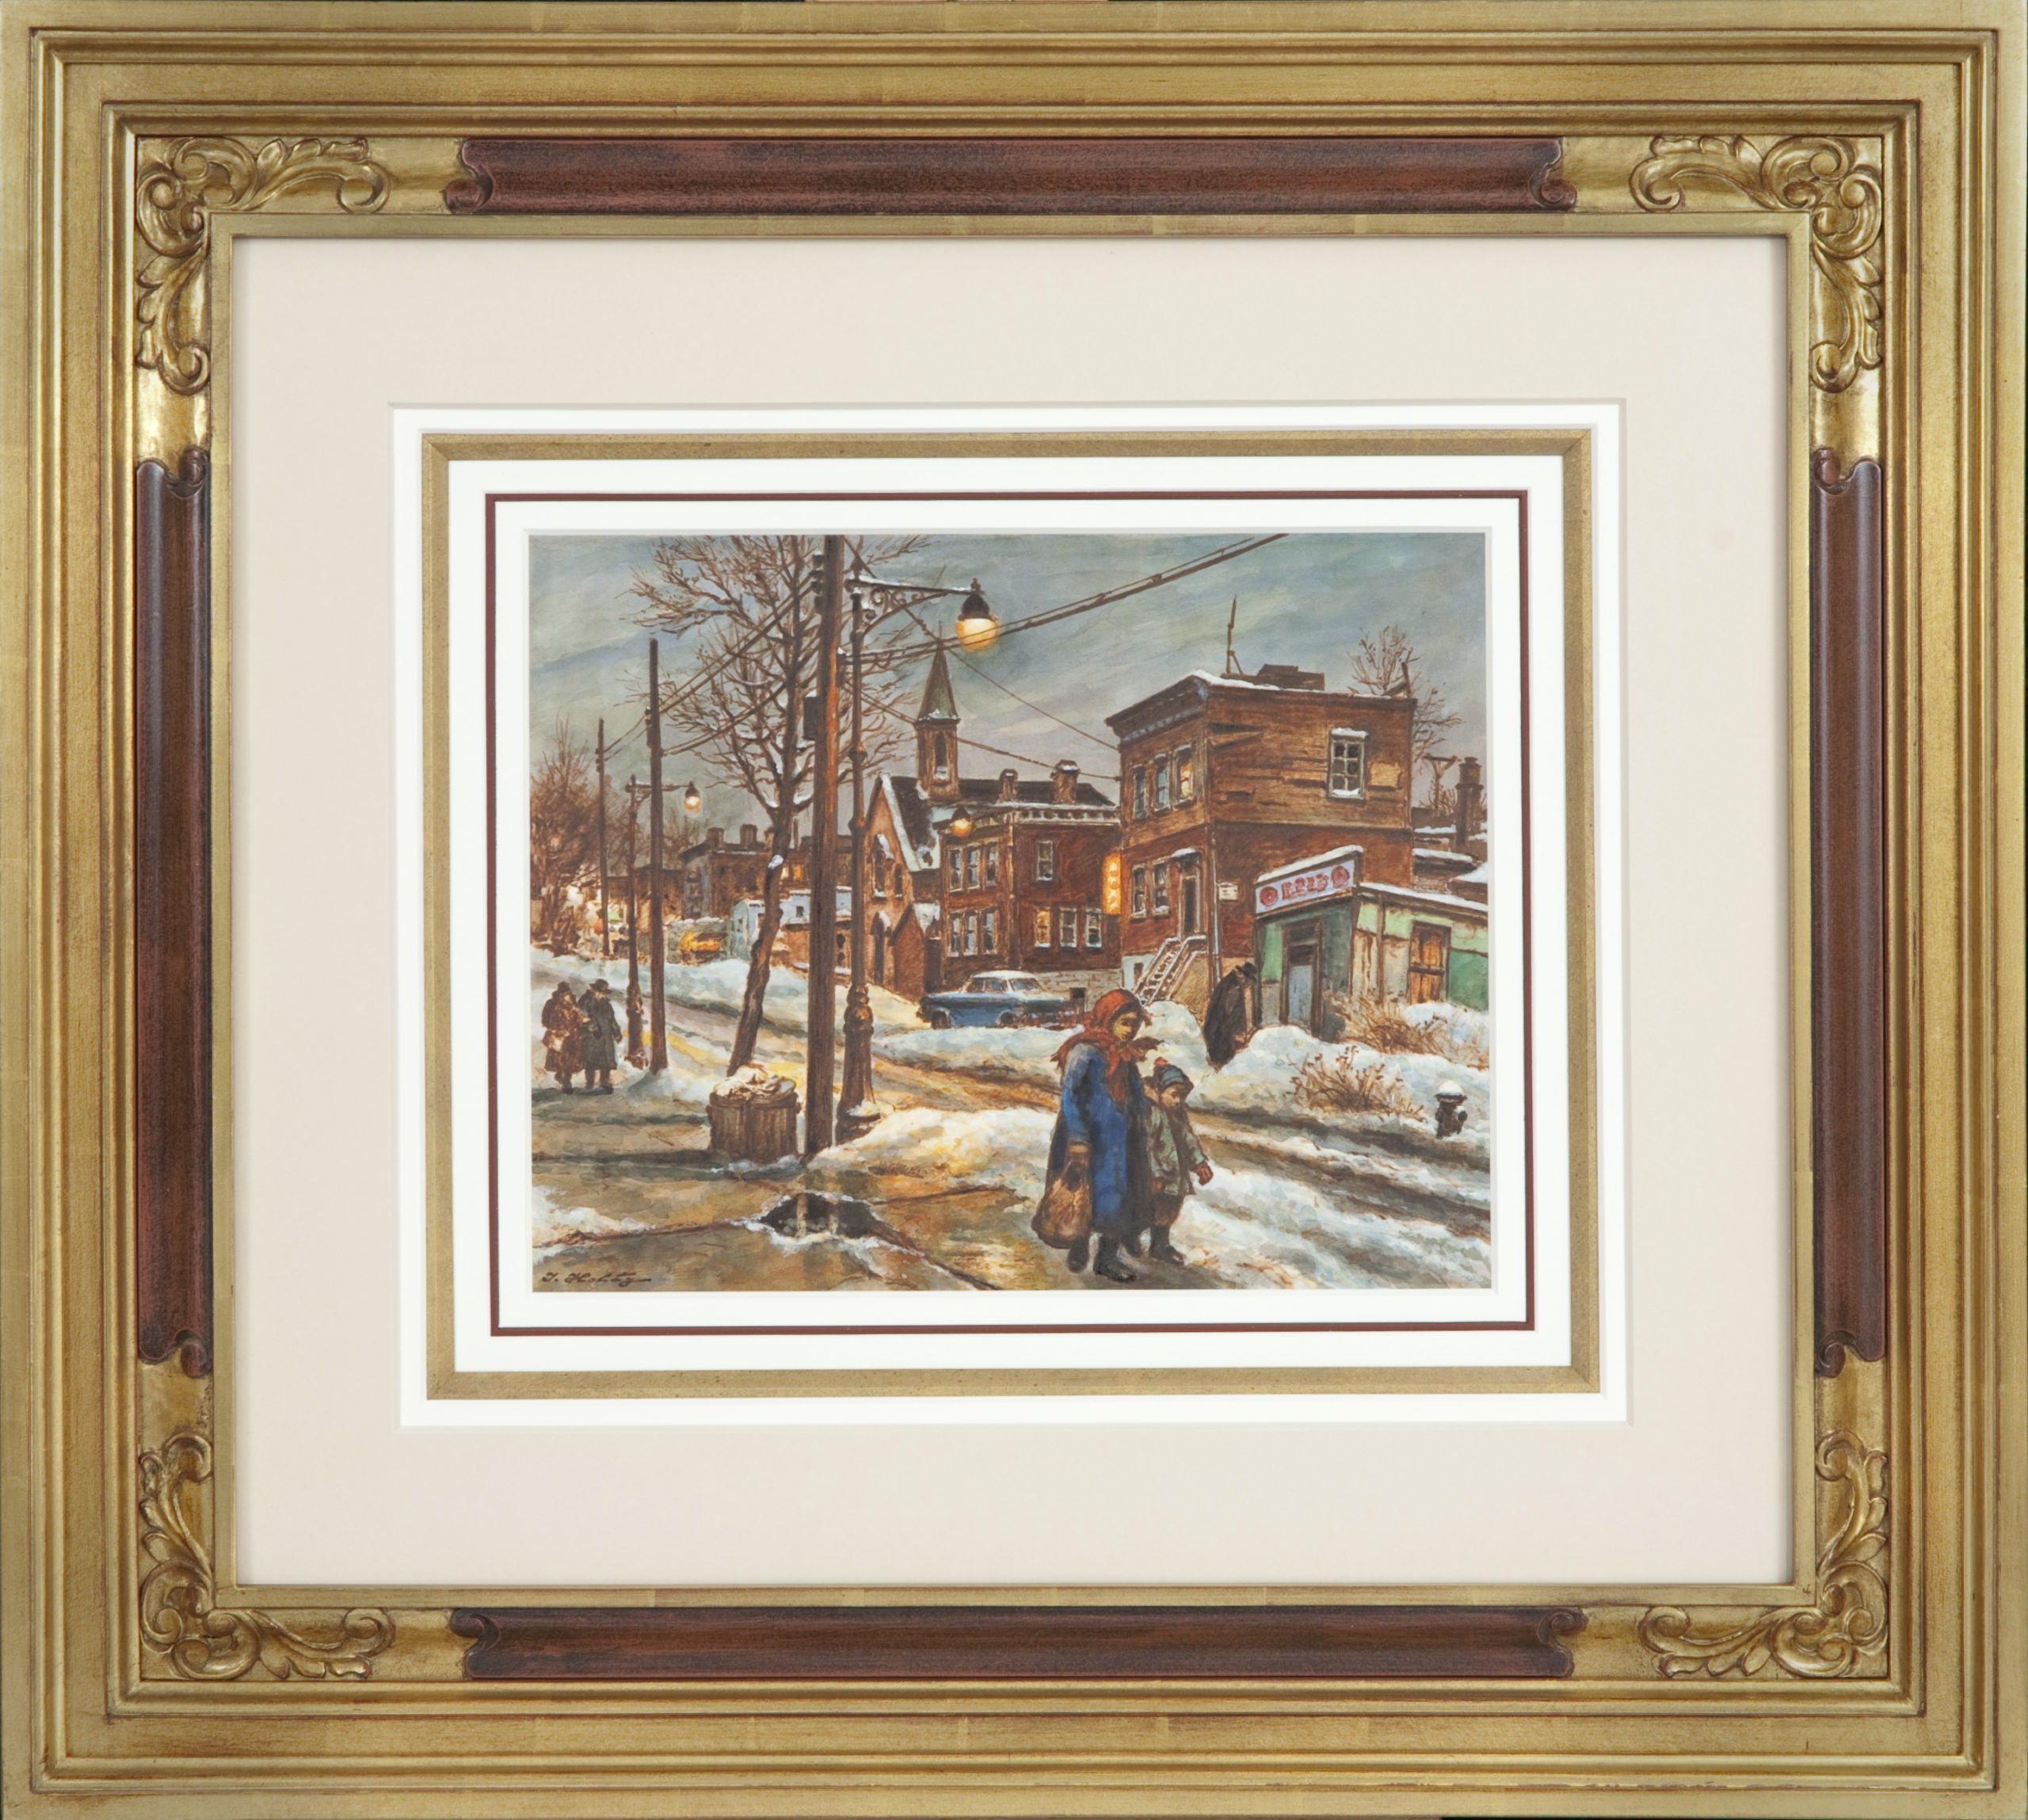 092 Snow Night 1968 - Watercolor - 13.5 x 11.5 - Frame: 28.75 x 26 x 2.75